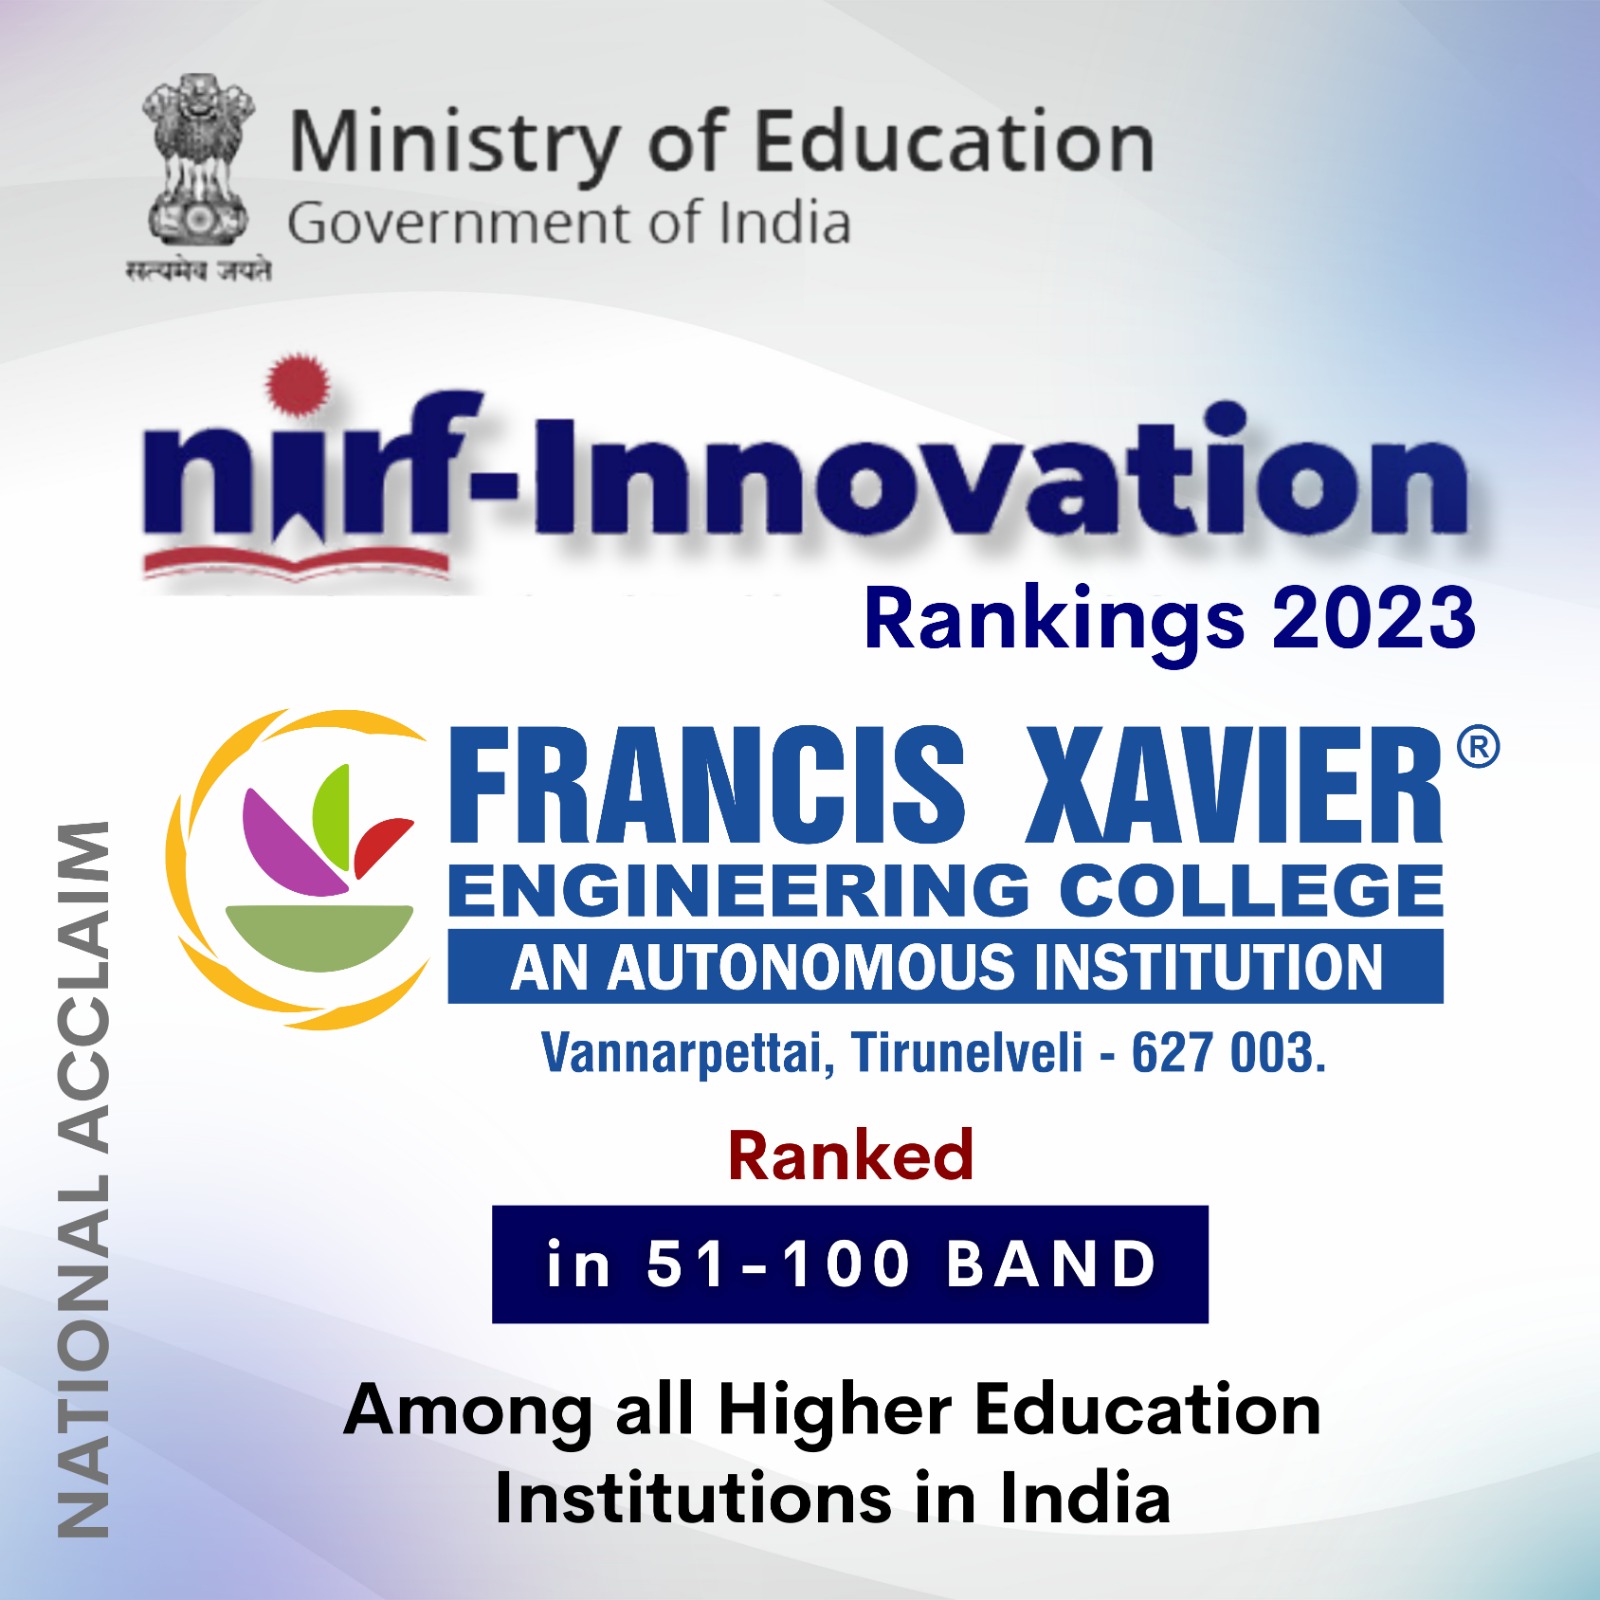 NIRF-Innovation Rankings 2023